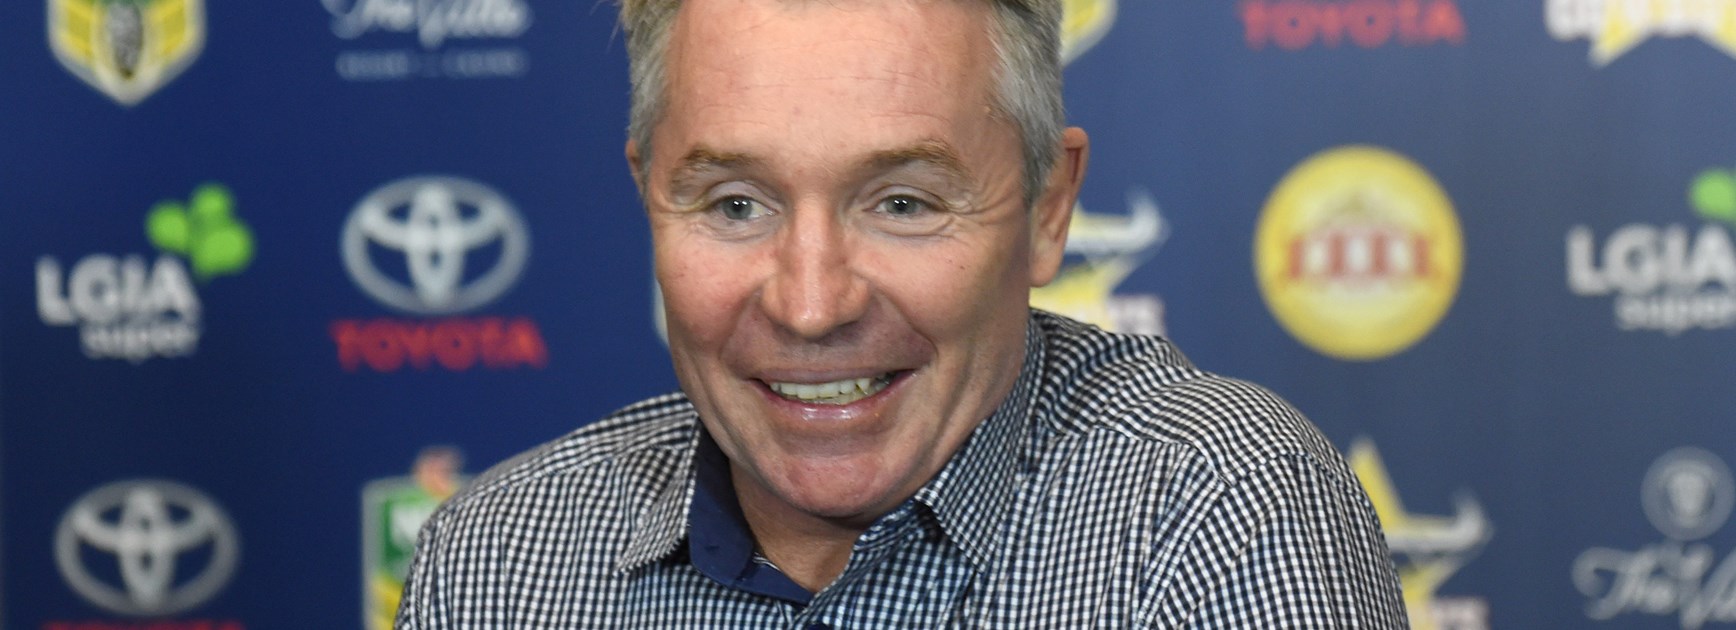 North Queensland Cowboys coach Paul Green.